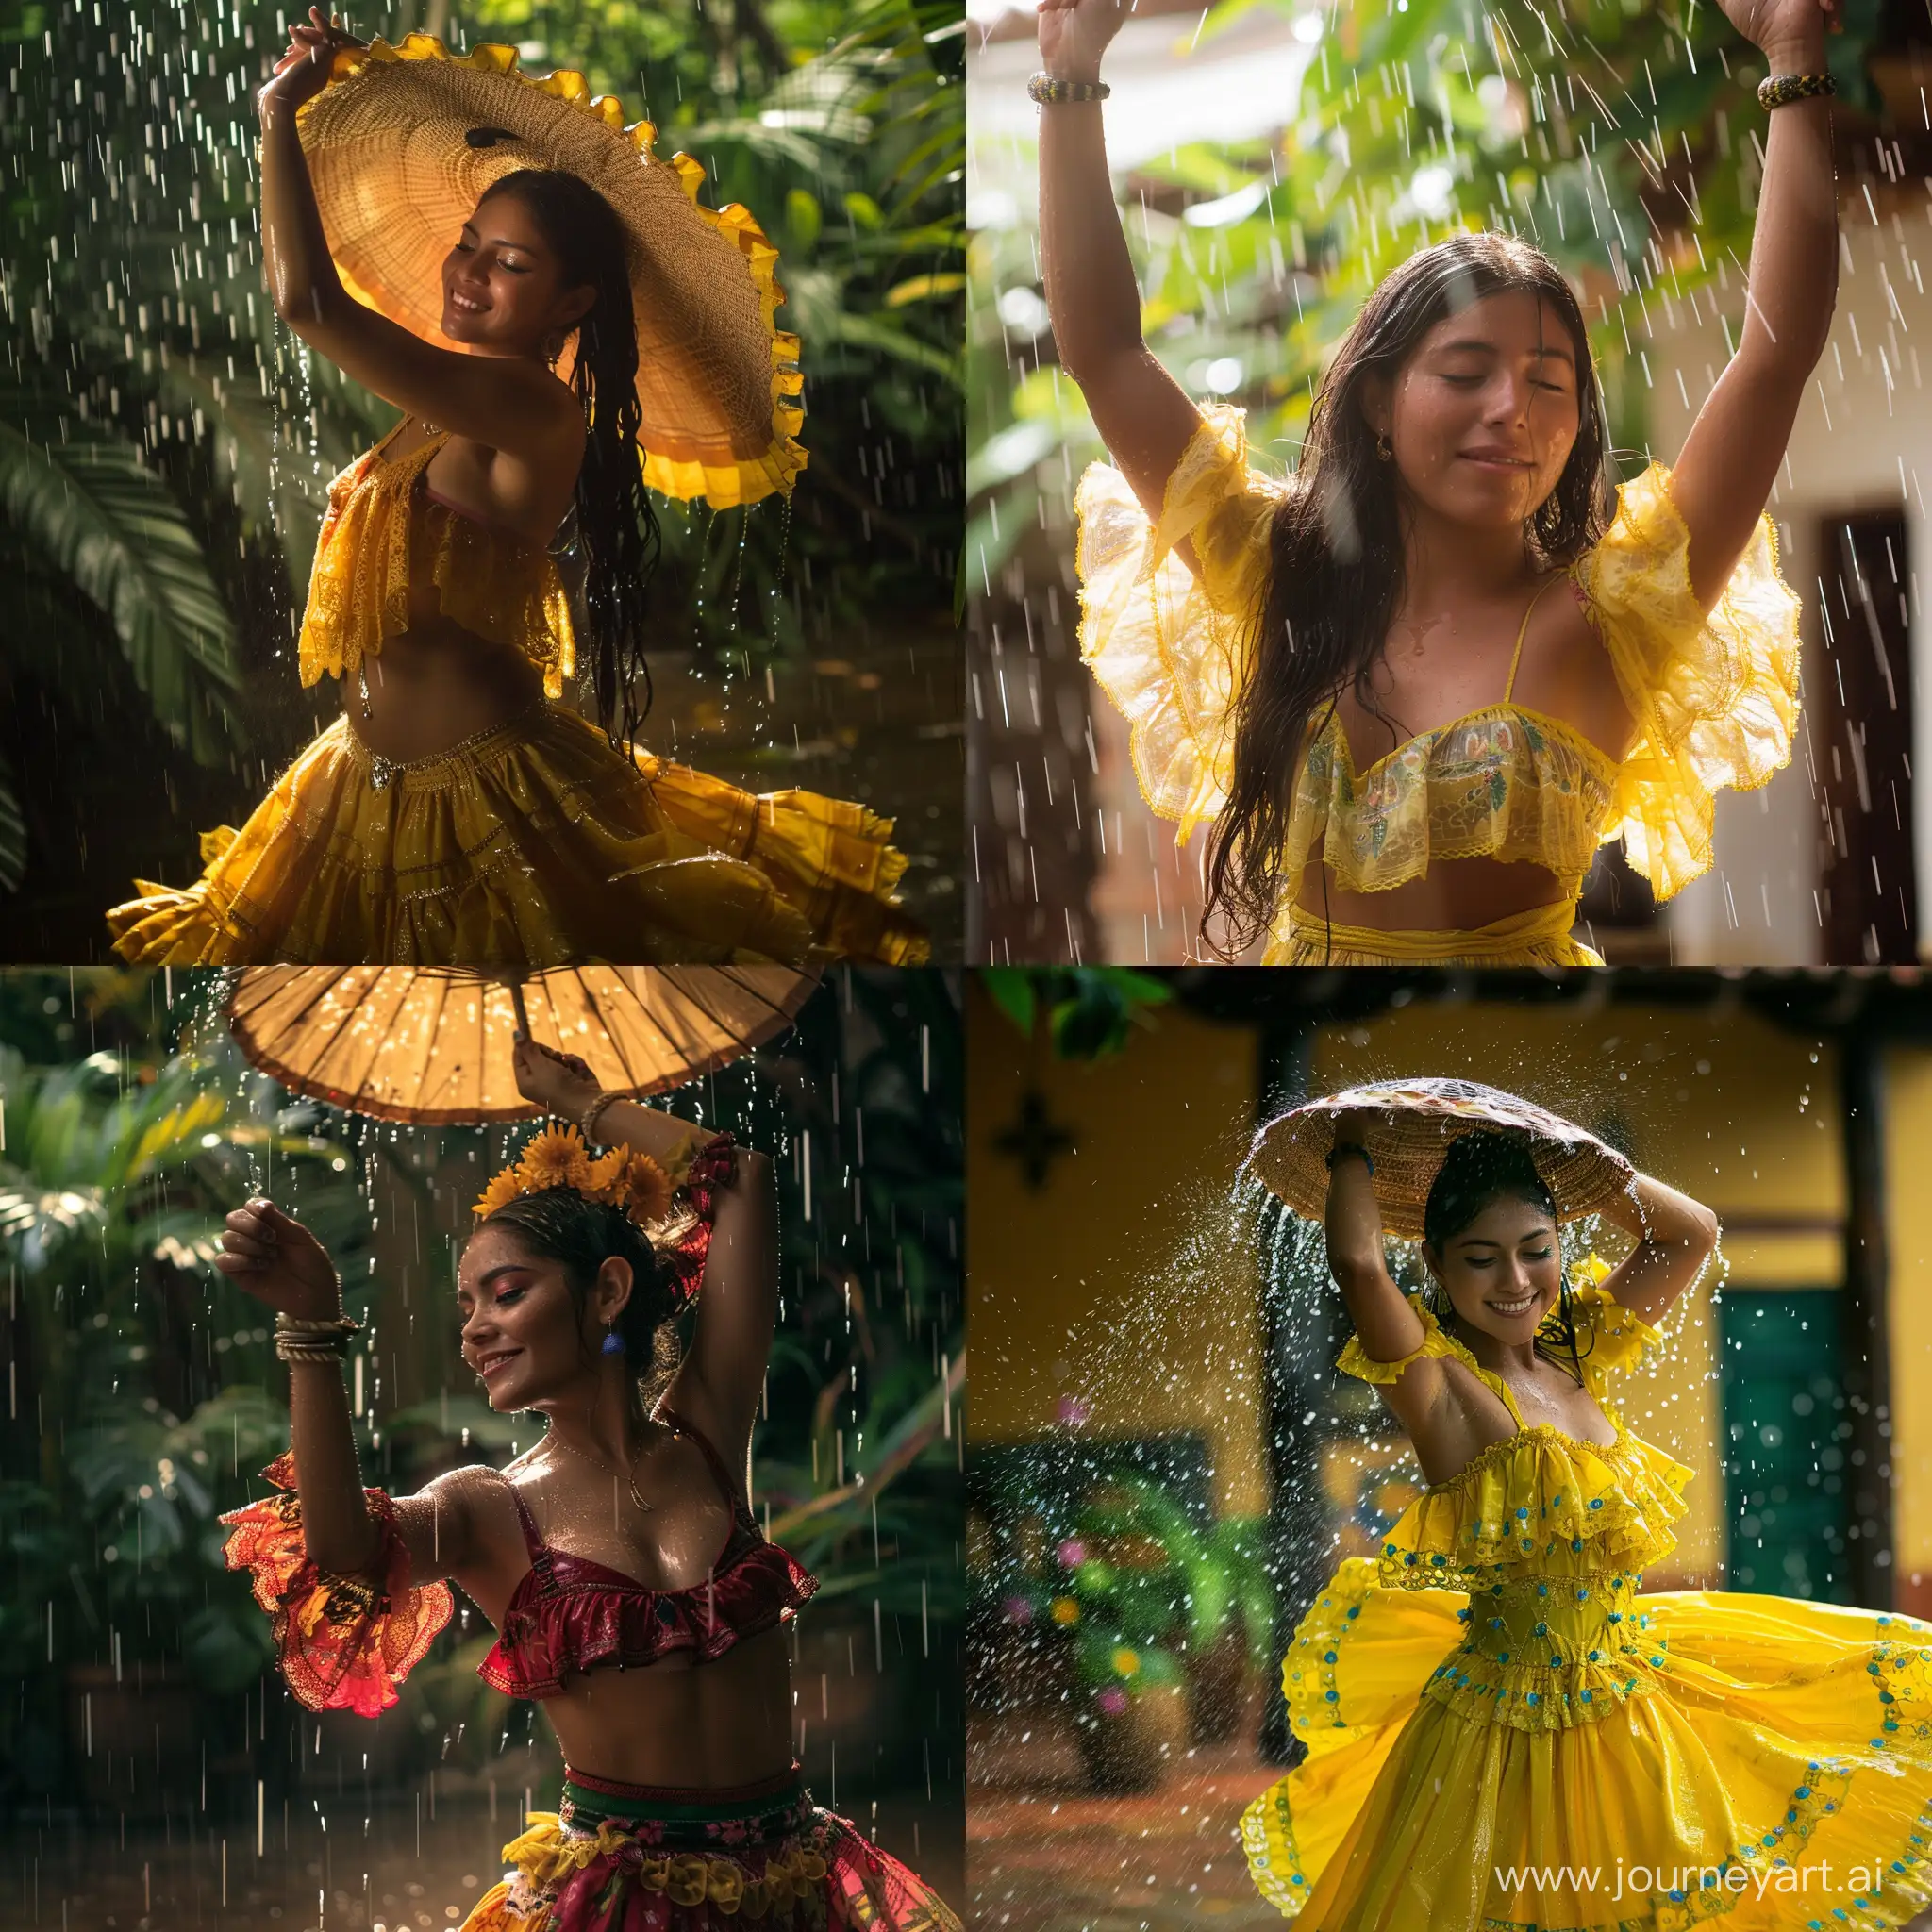 Young Colombian woman dancing in the rain